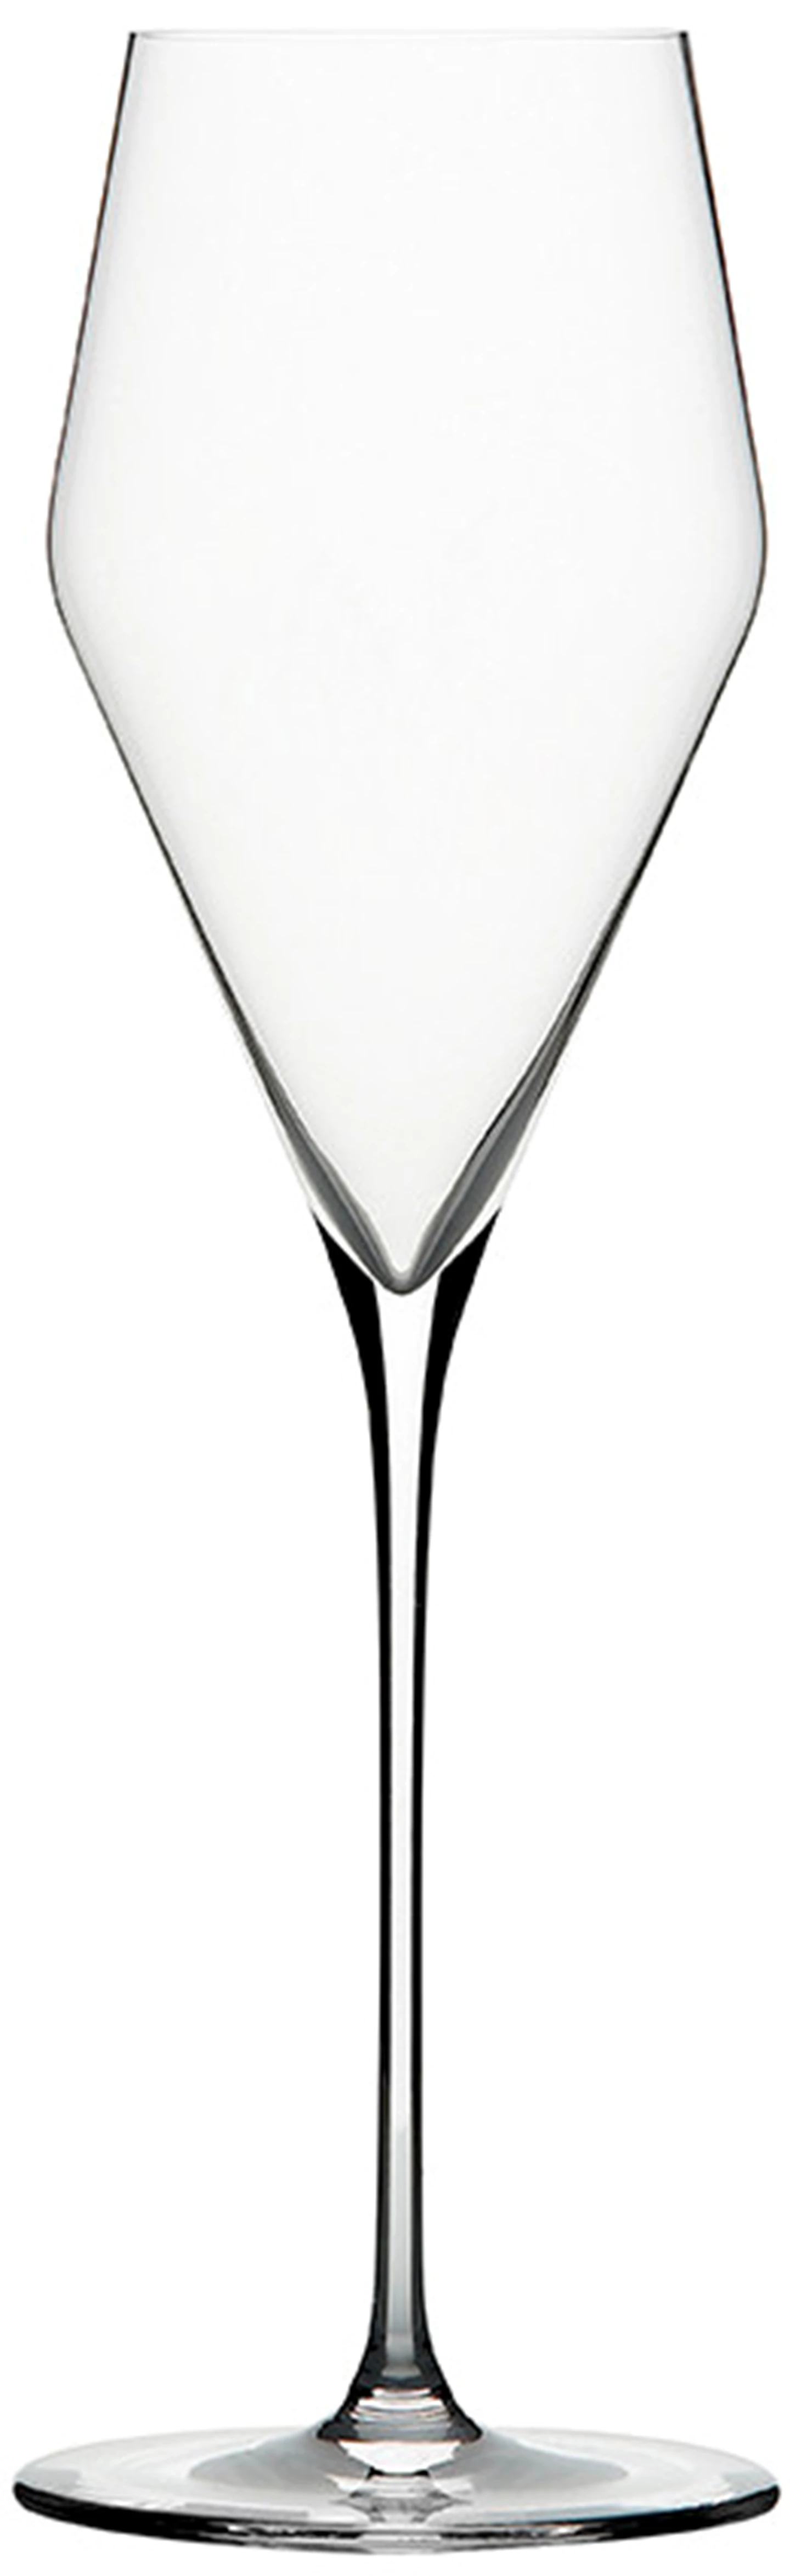 Løgismose Grej Zalto Glasperfektion Champagneglas 6 stk - 127376